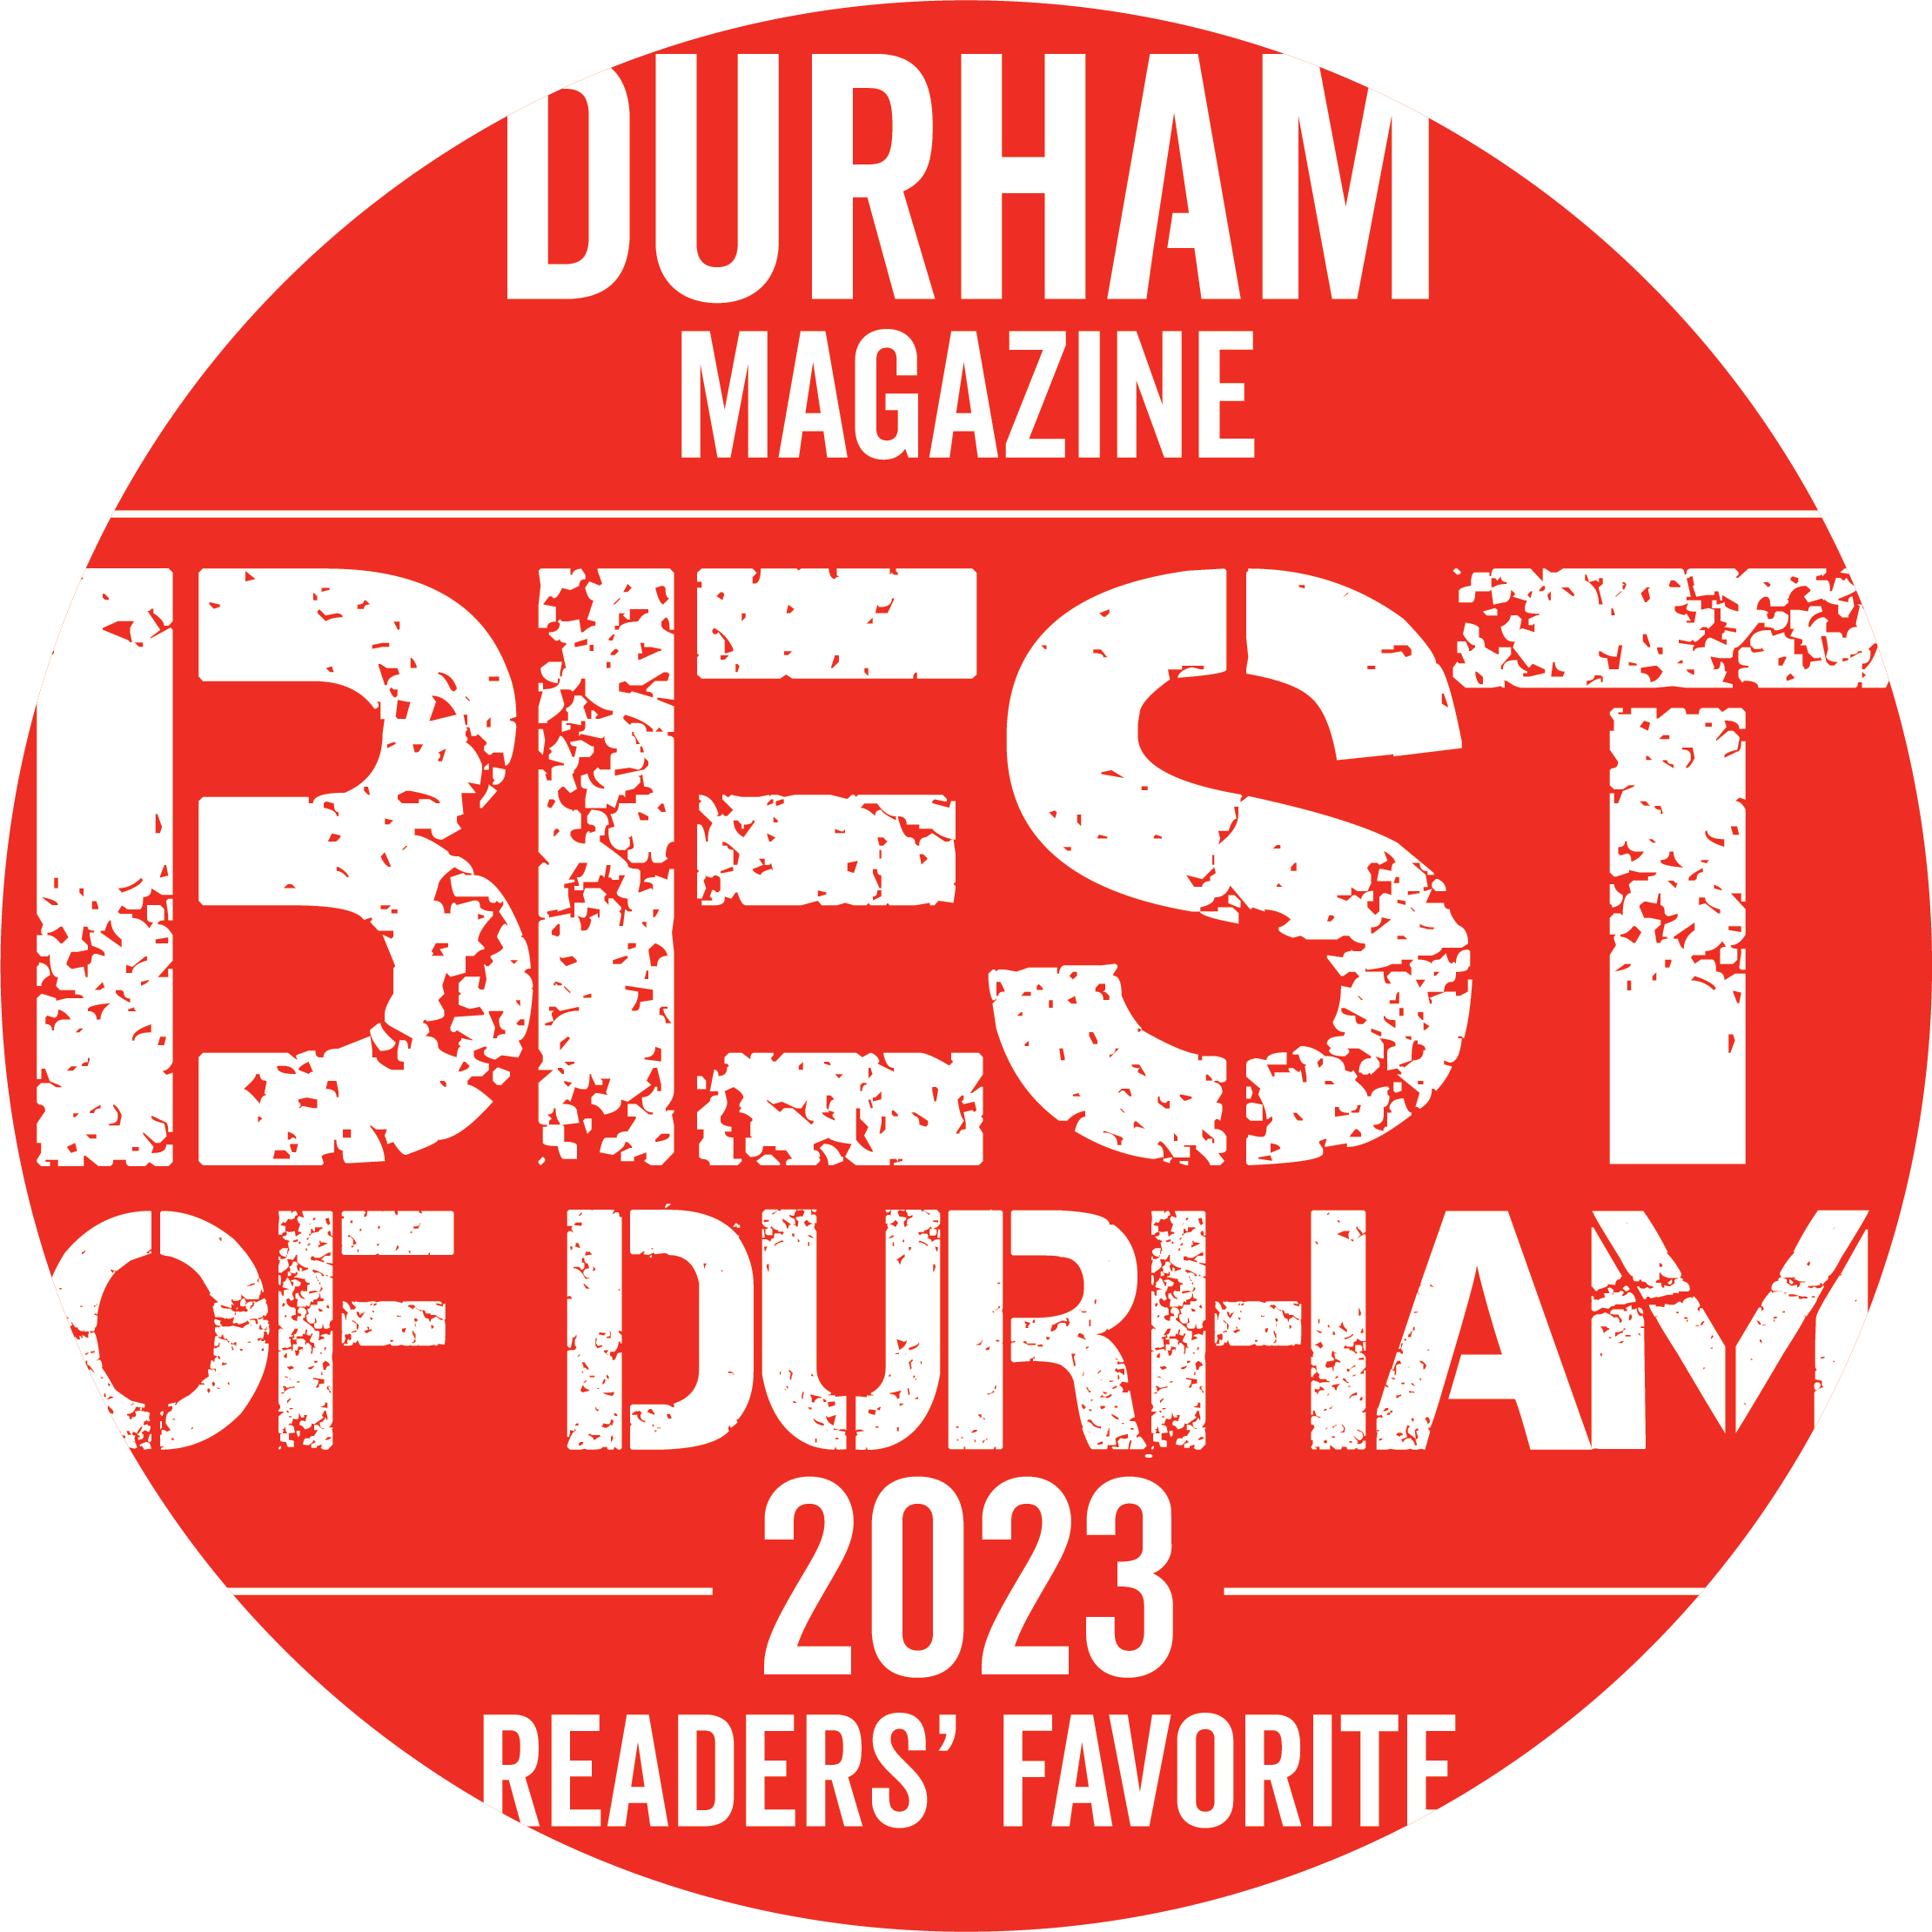 Best of Durham 2023